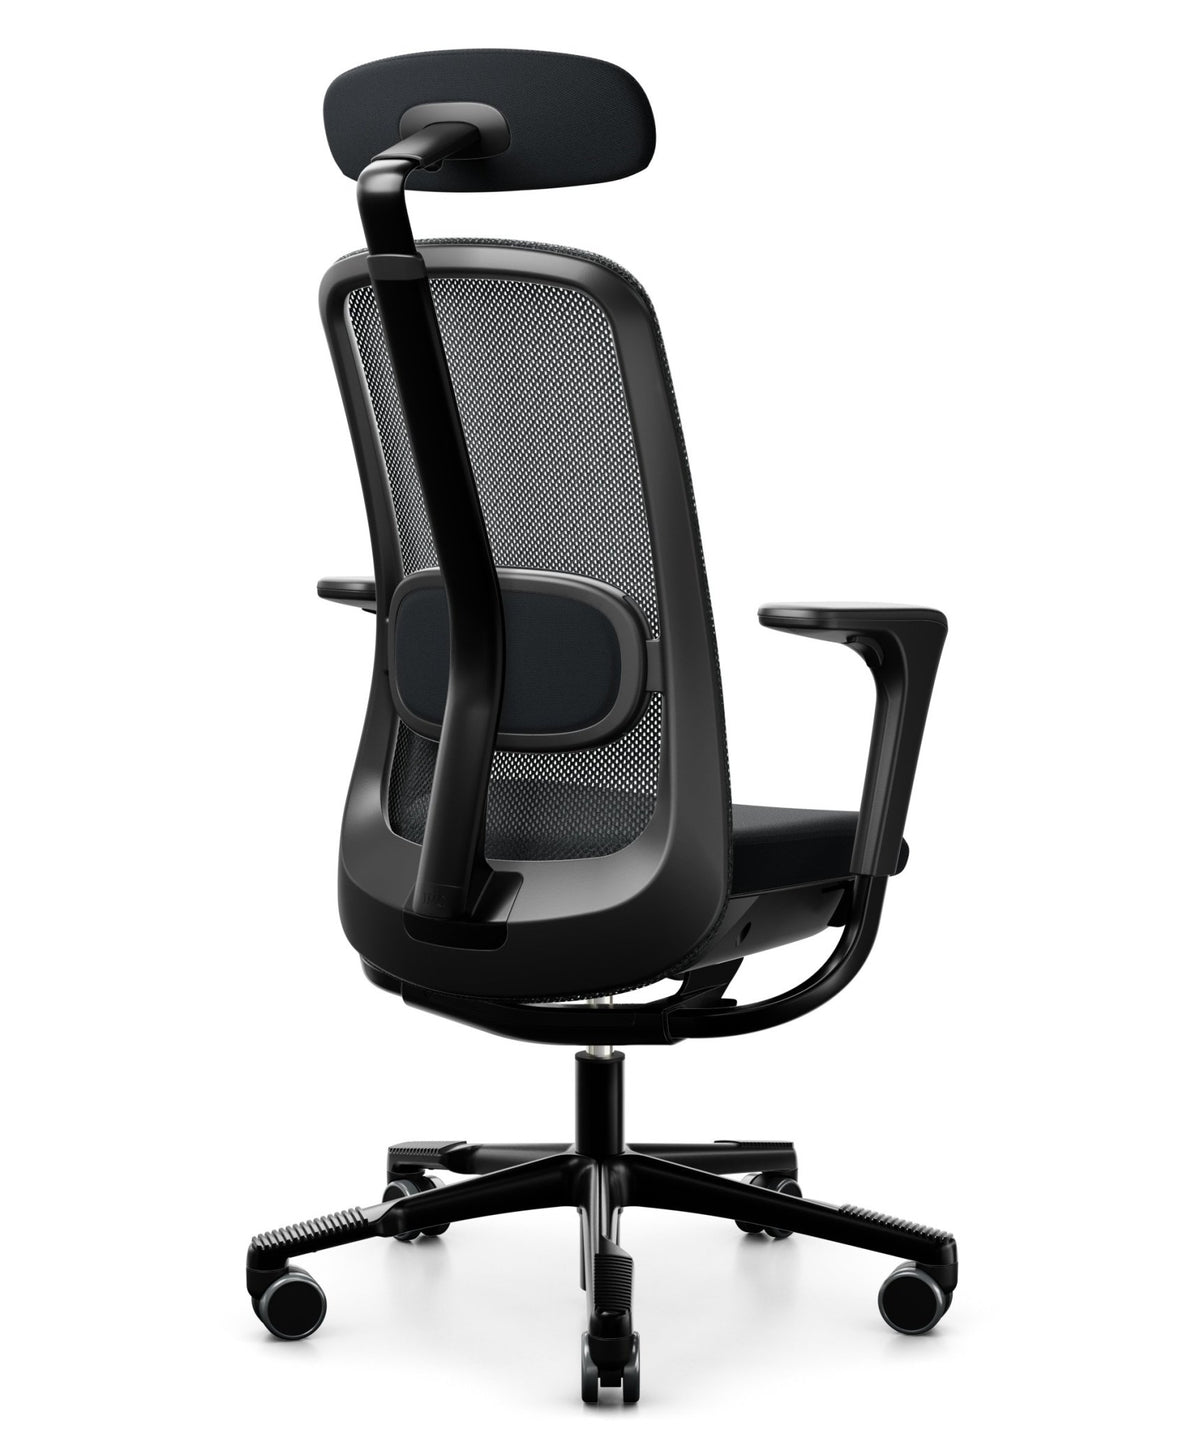 HÅG SoFi Mesh 7500 Ergonomic Office Chair with Headrest - Black - ergokid Singapore